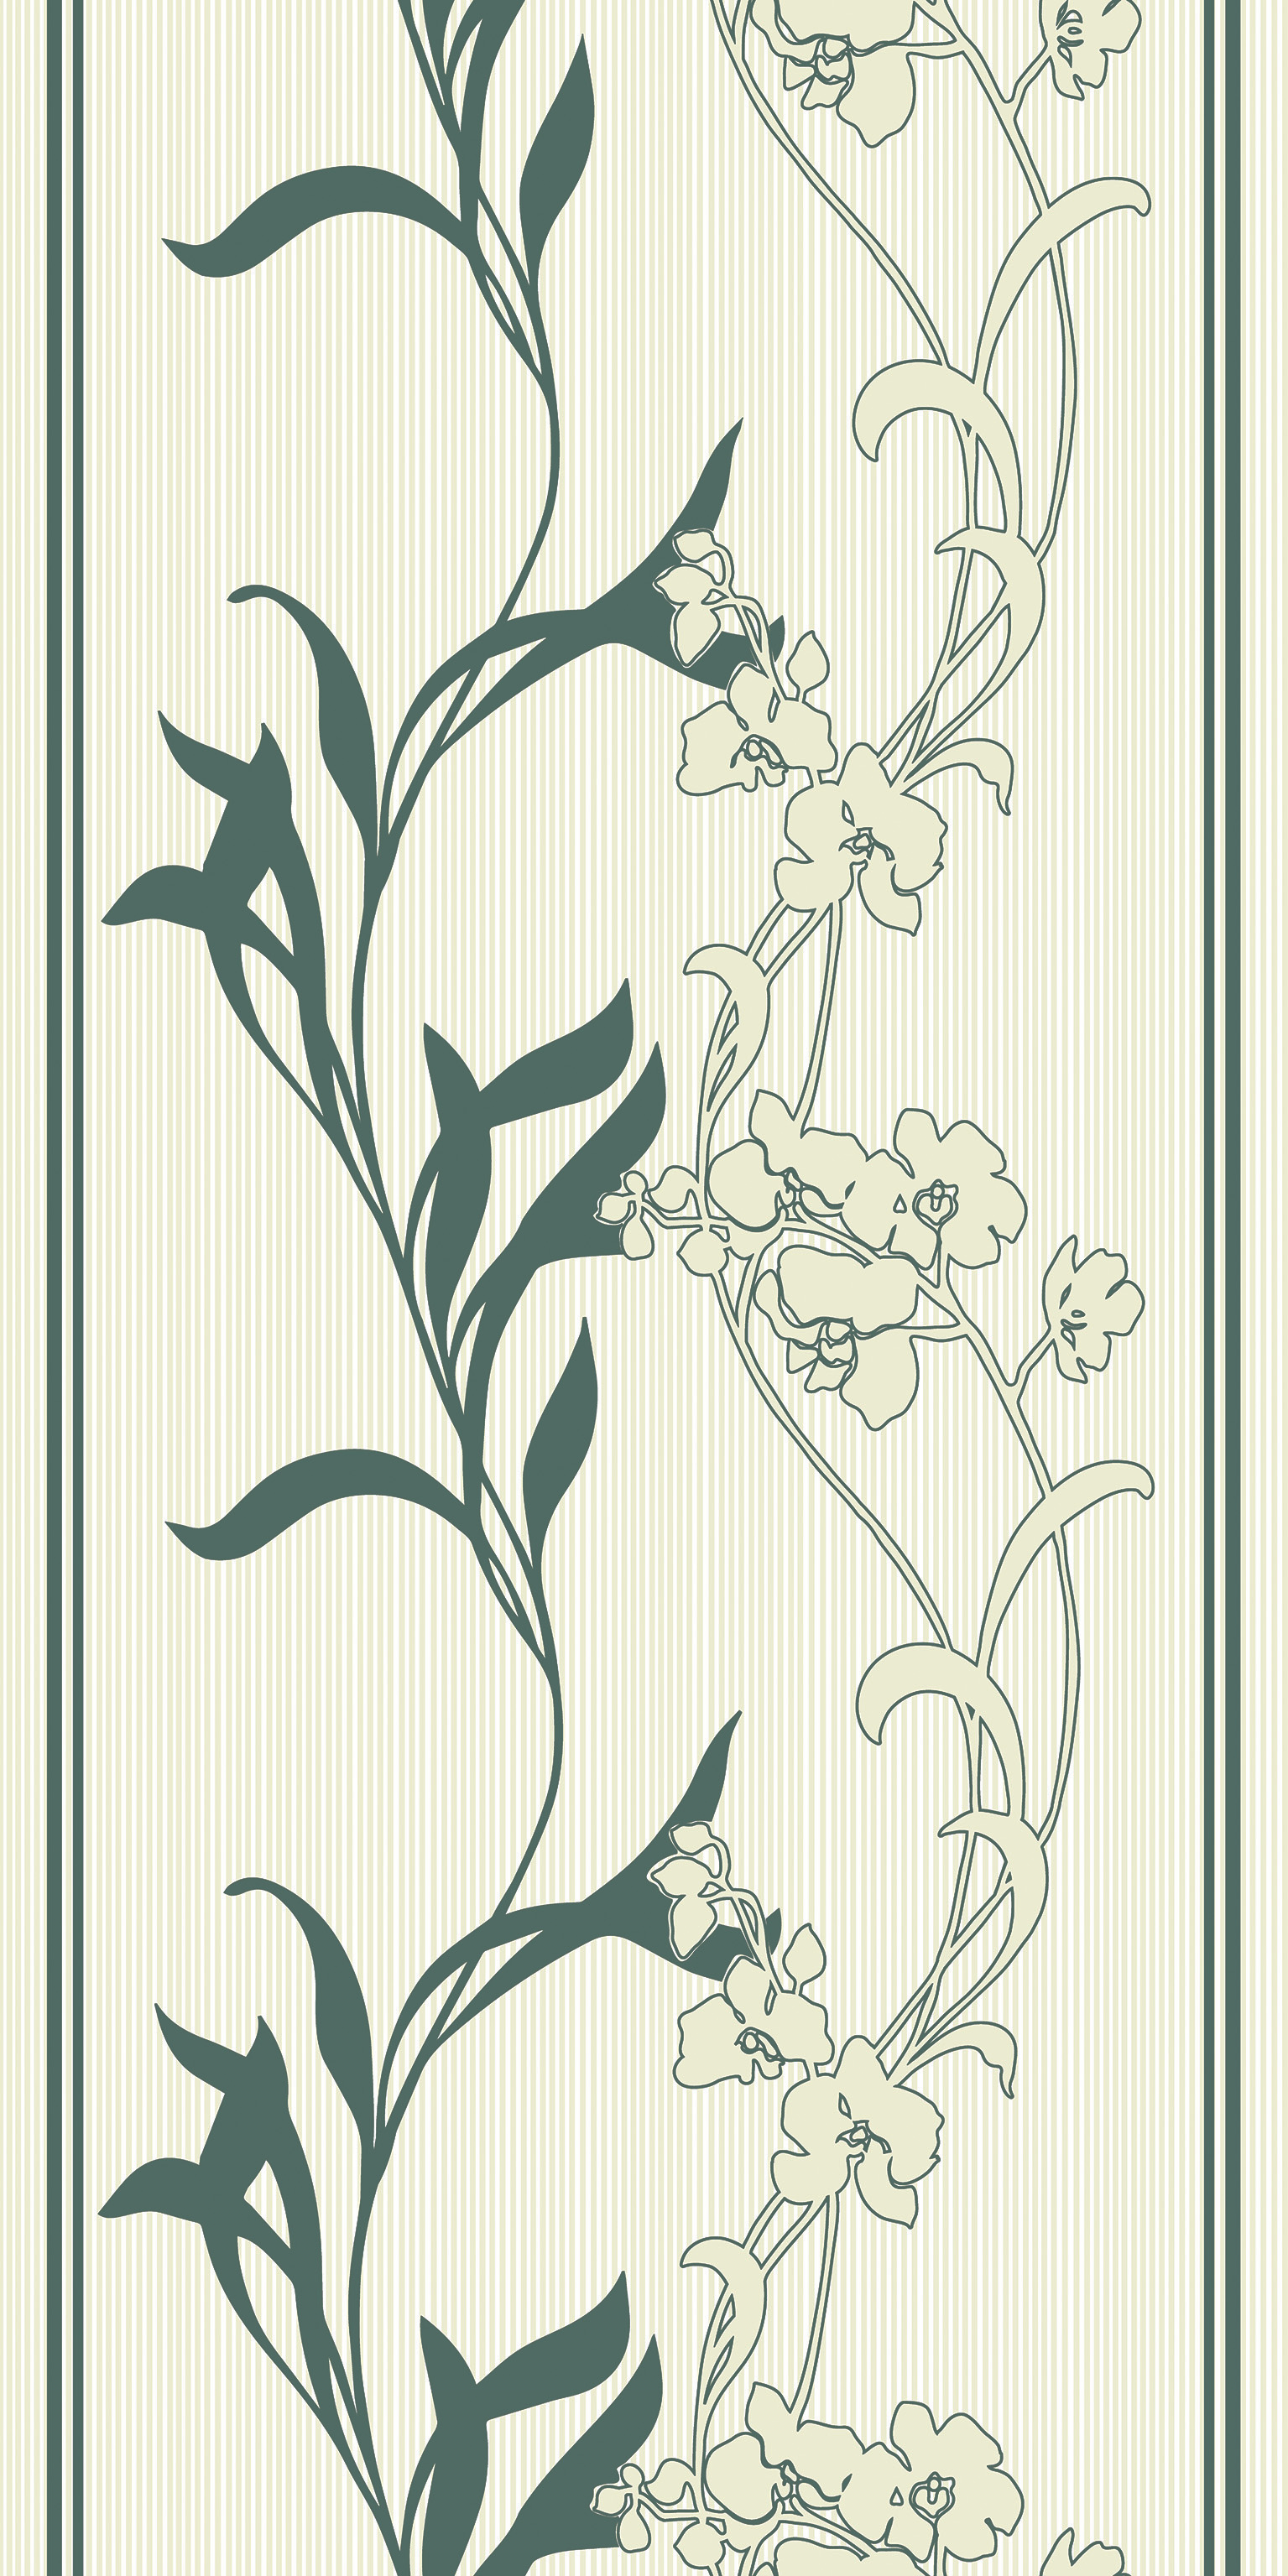 Пленка для термопереноса 339-3 орхидеи изумруд из коллекции Freedom